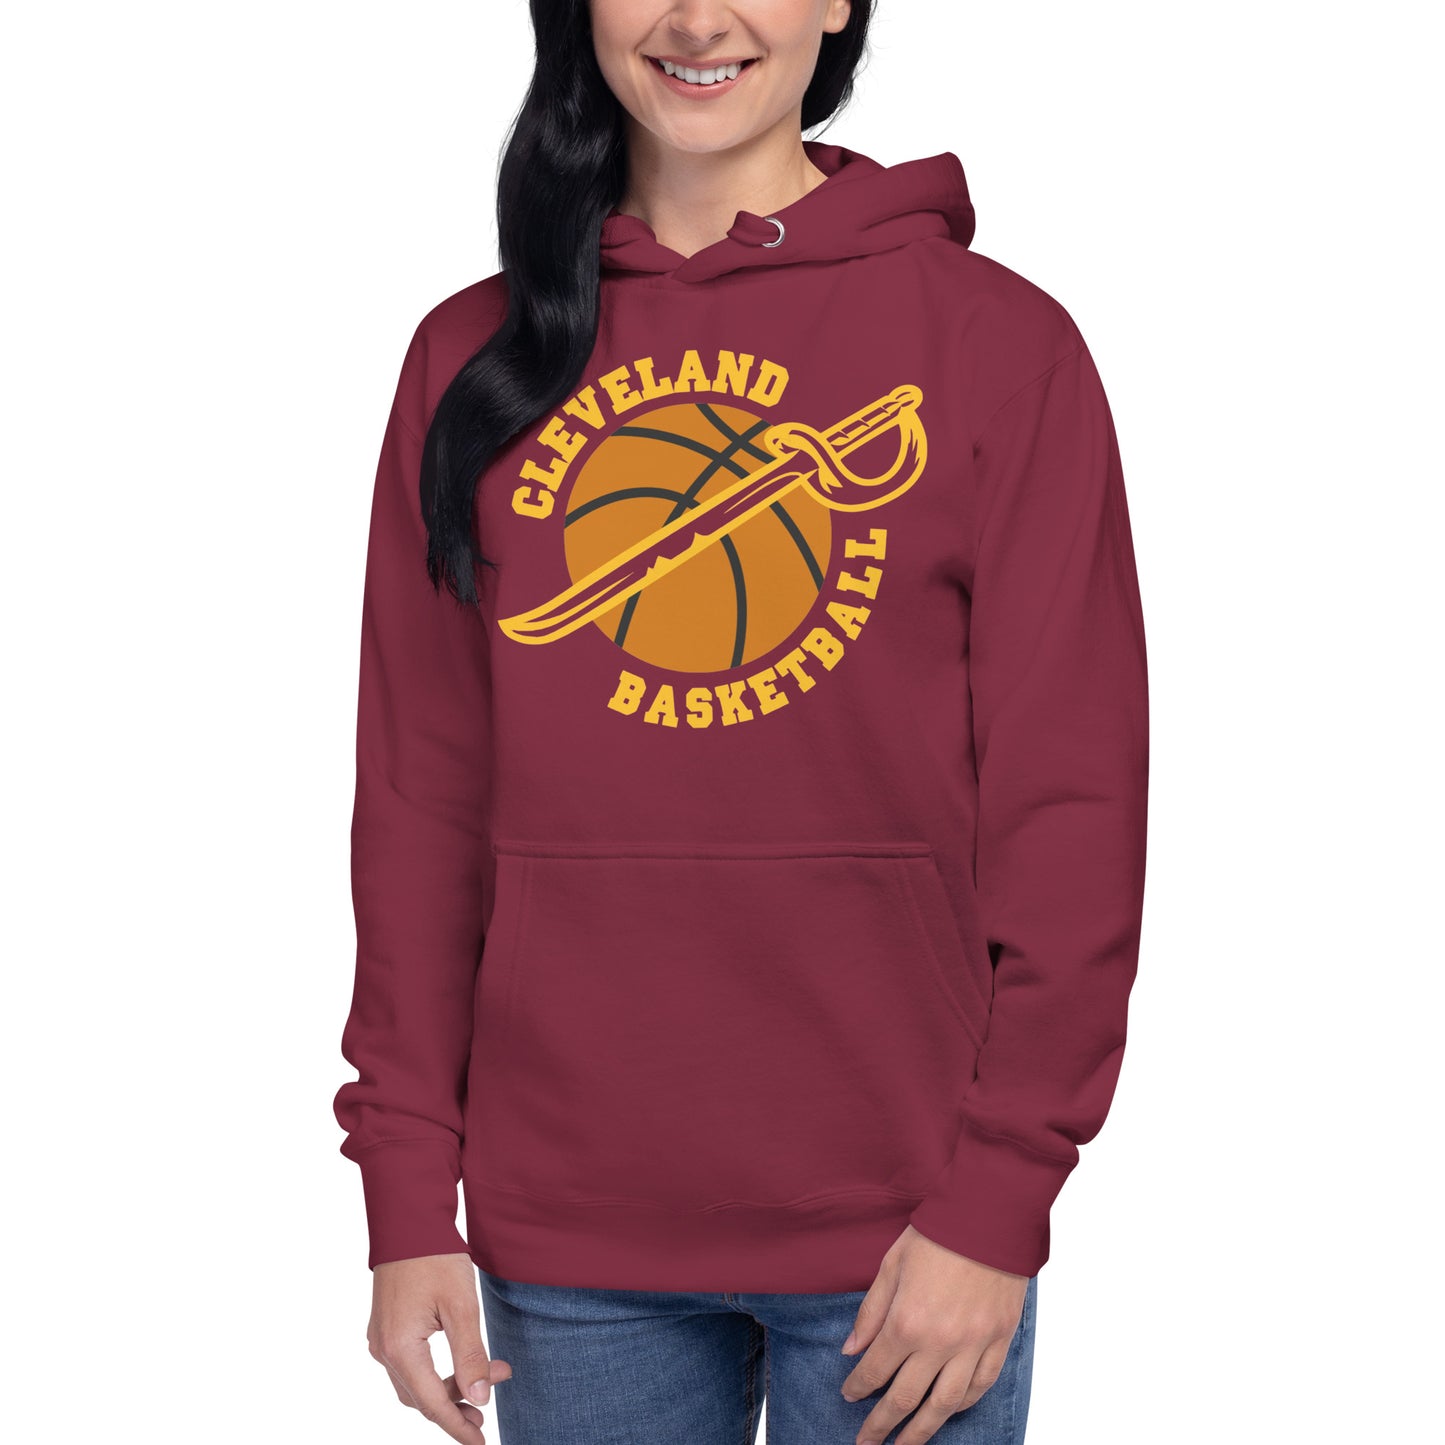 Cleveland Basketball Unisex Hoodie